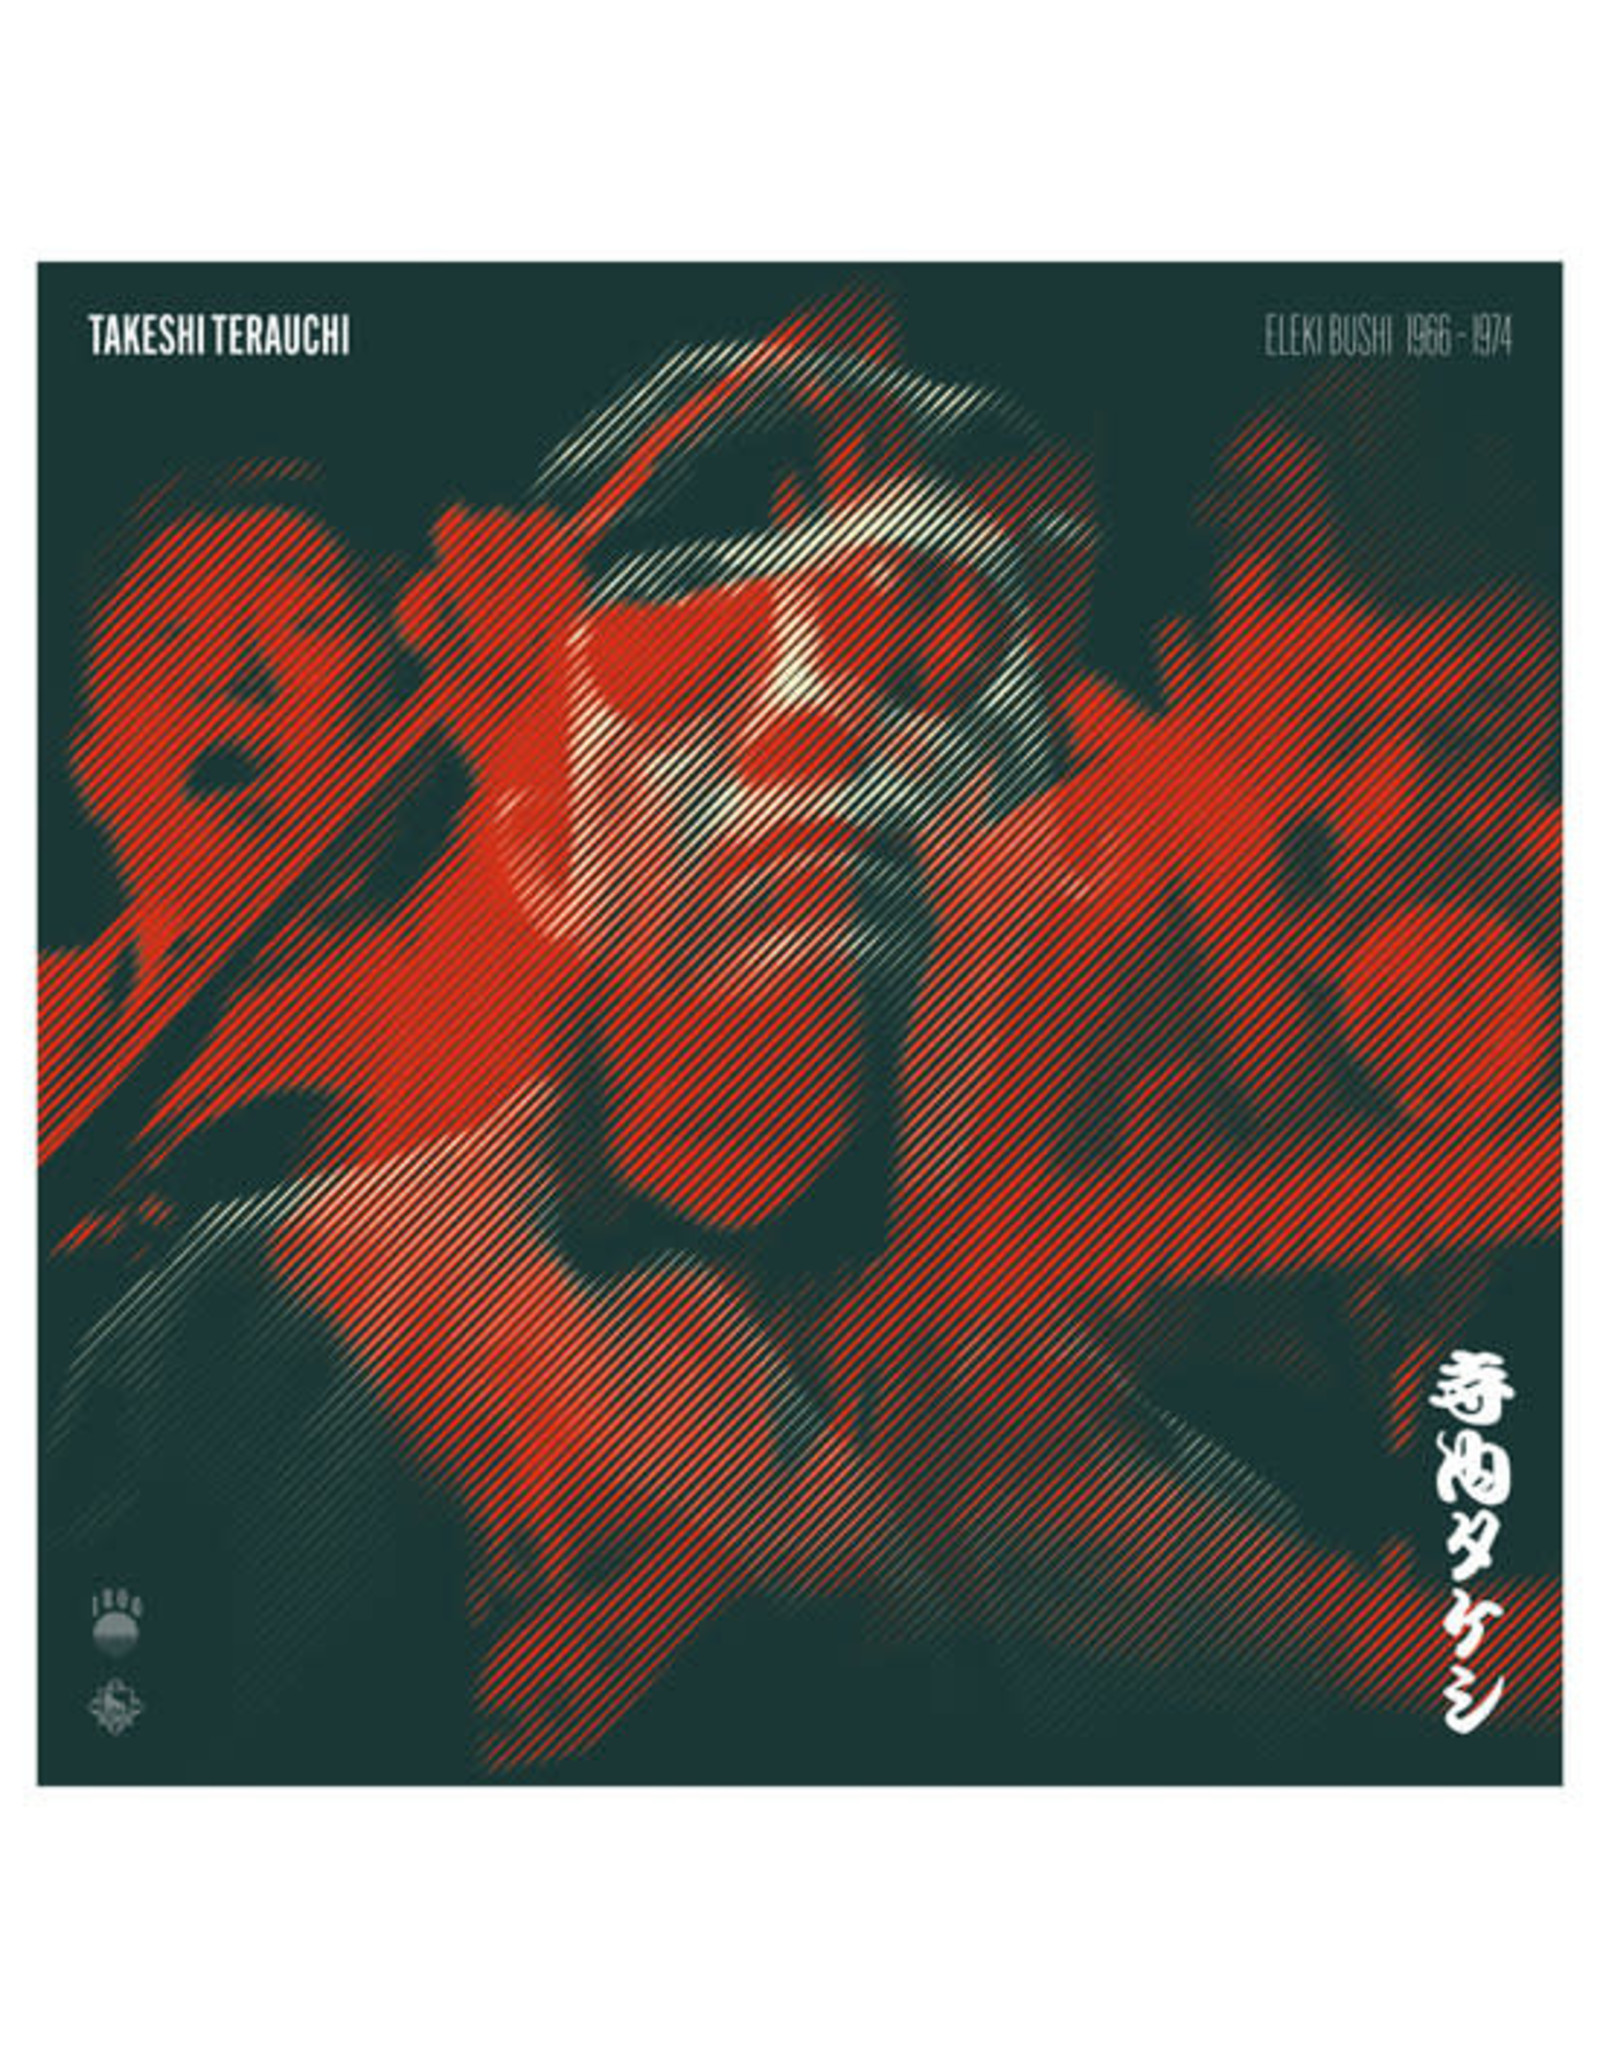 180g Terauchi, Takeshi: Eleki Bushi 1966-1974 LP